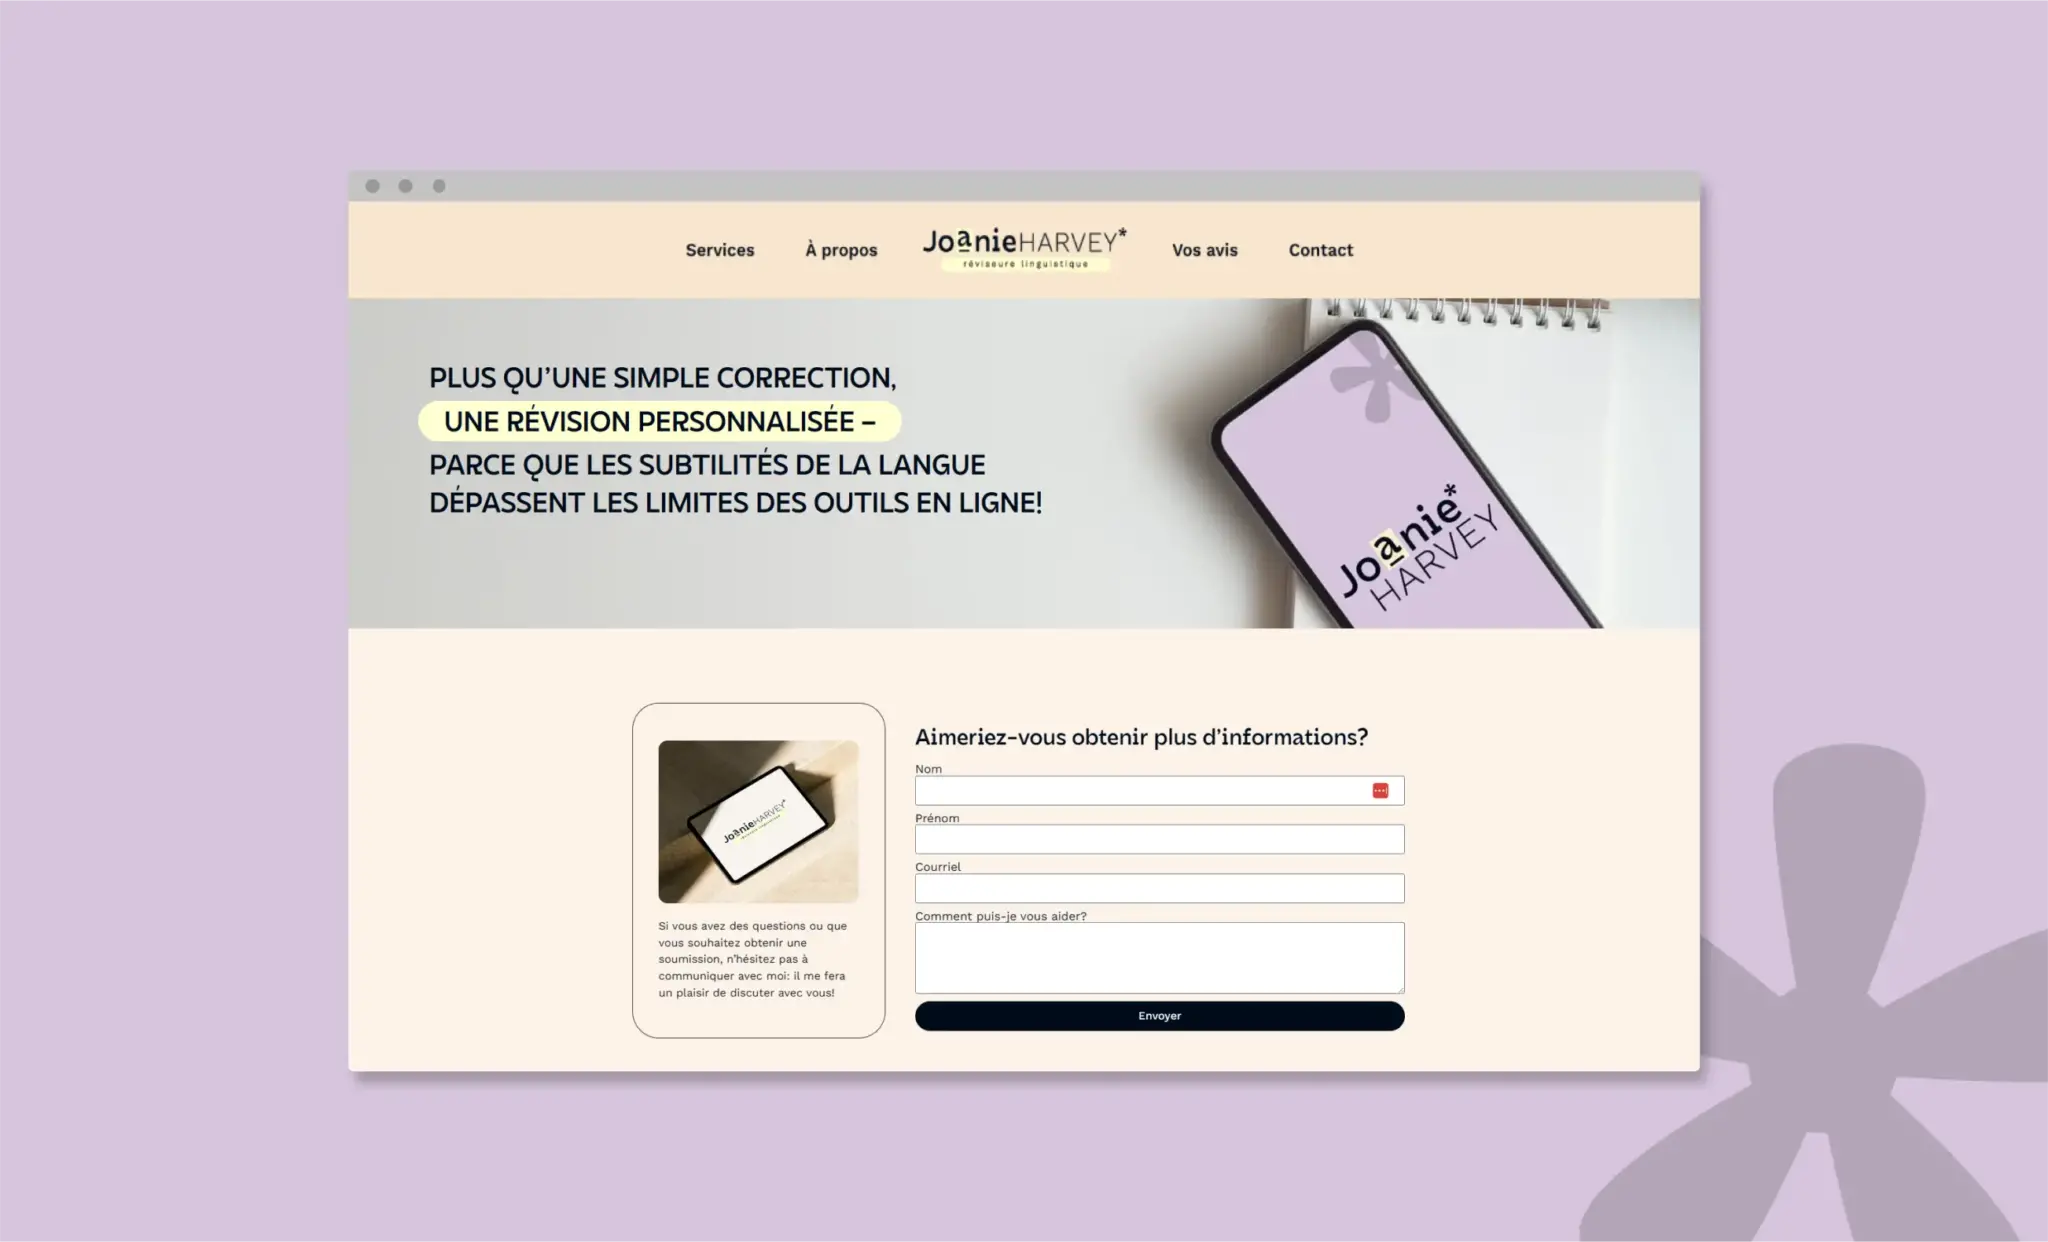 moose agence marketing portfolio joanie harvey reviseure linguistique site web 2